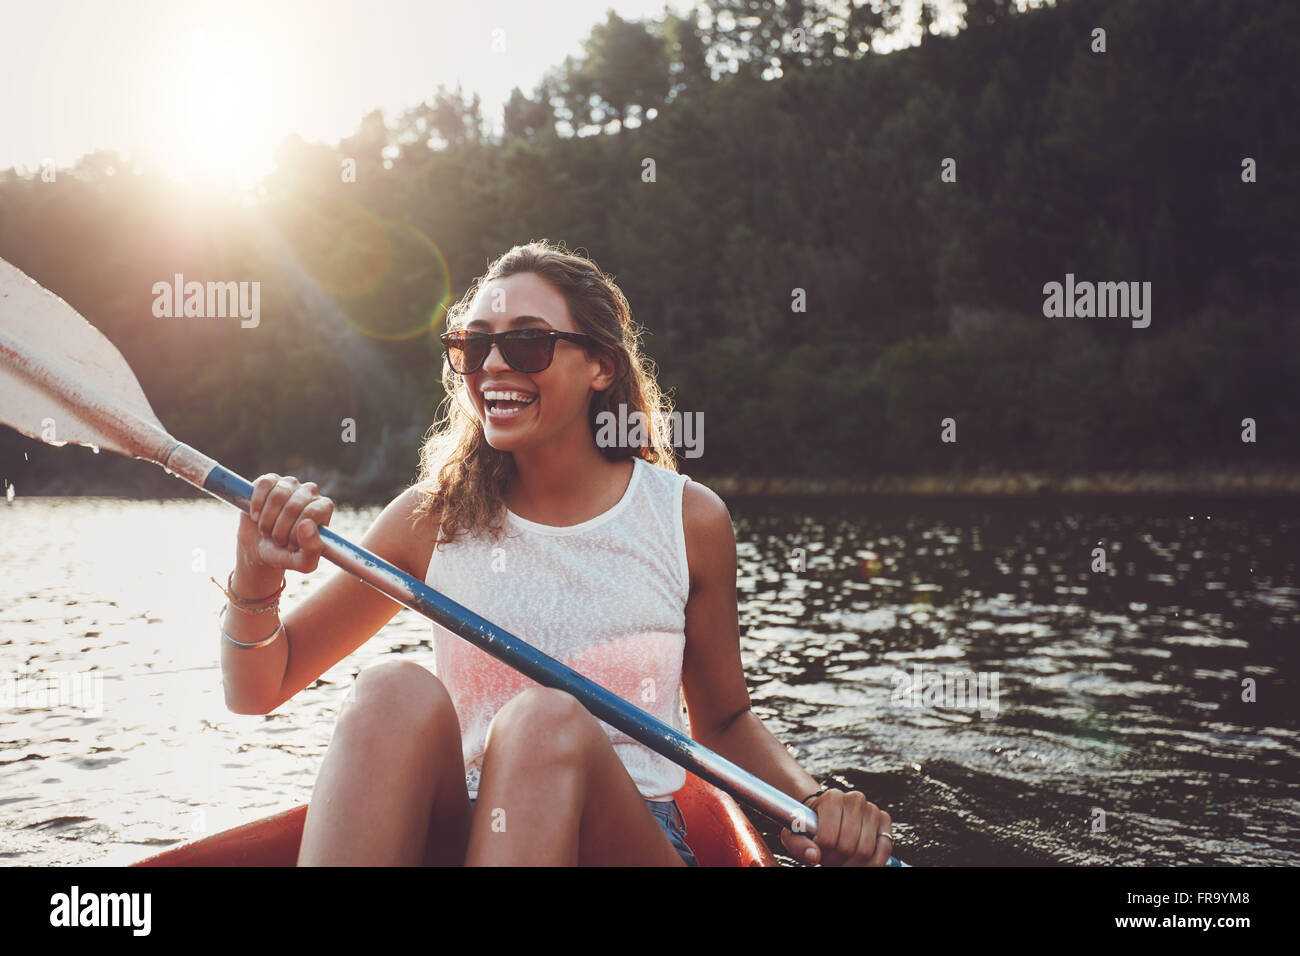 Lächelnde junge Frau auf einem See paddeln. Glückliche junge Frau an einem Sommertag in einem See paddeln. Stockfoto